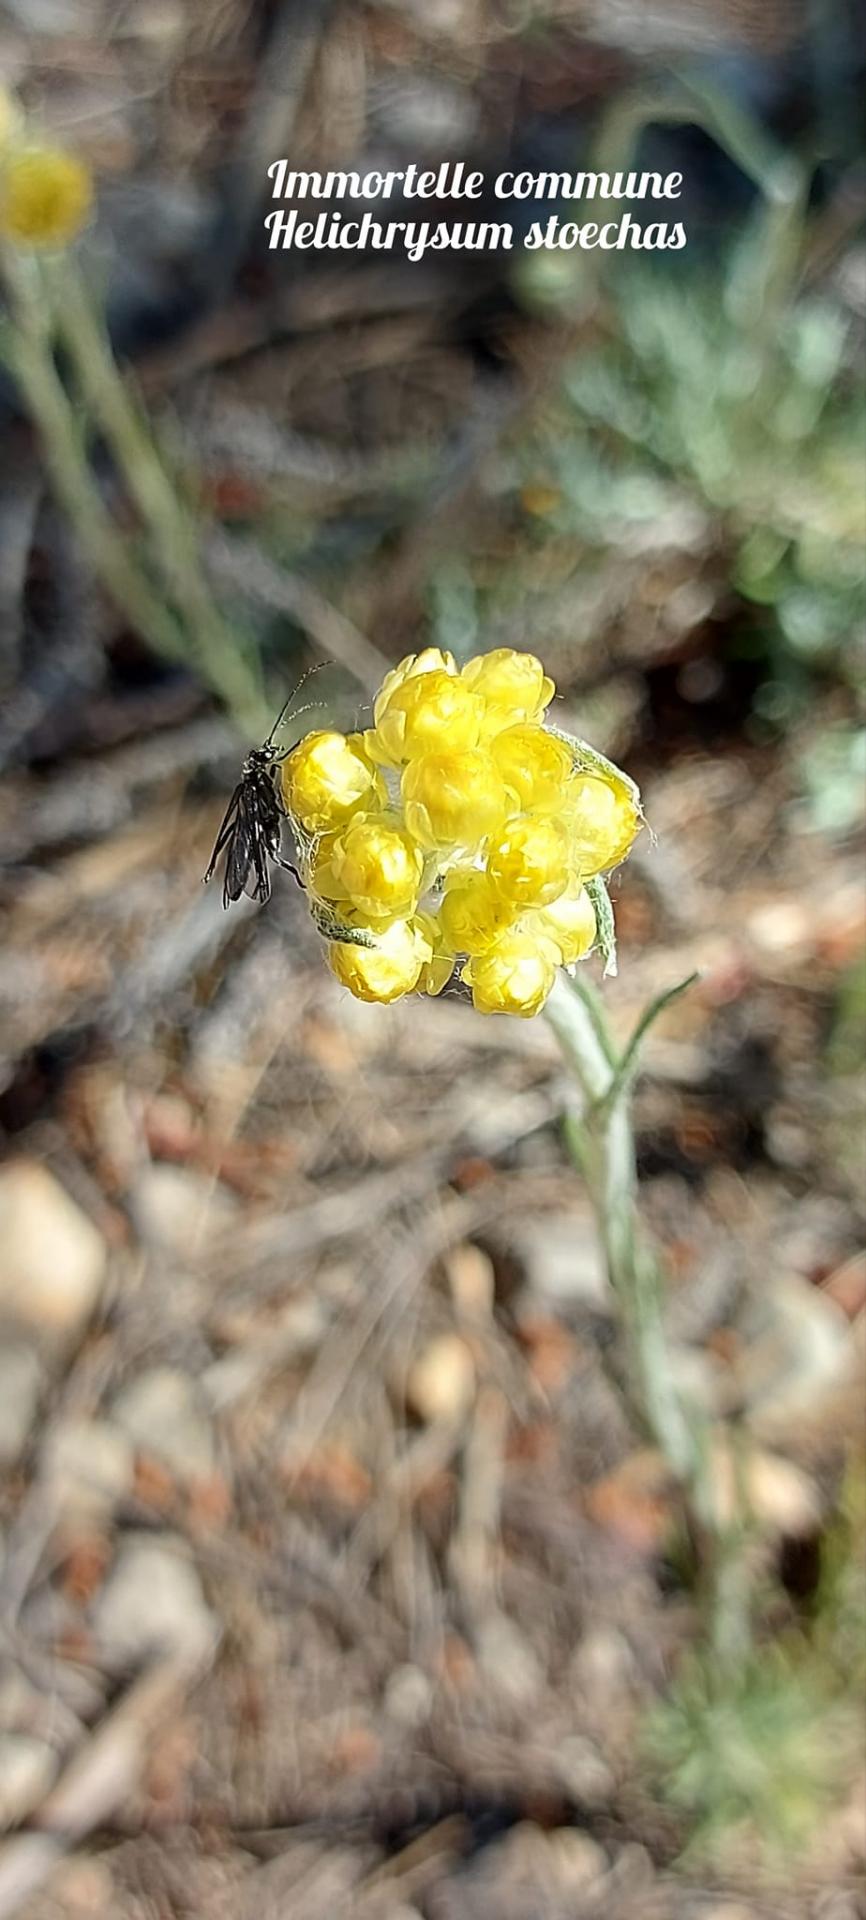 Helichrysum stoechas 1 03 05 23